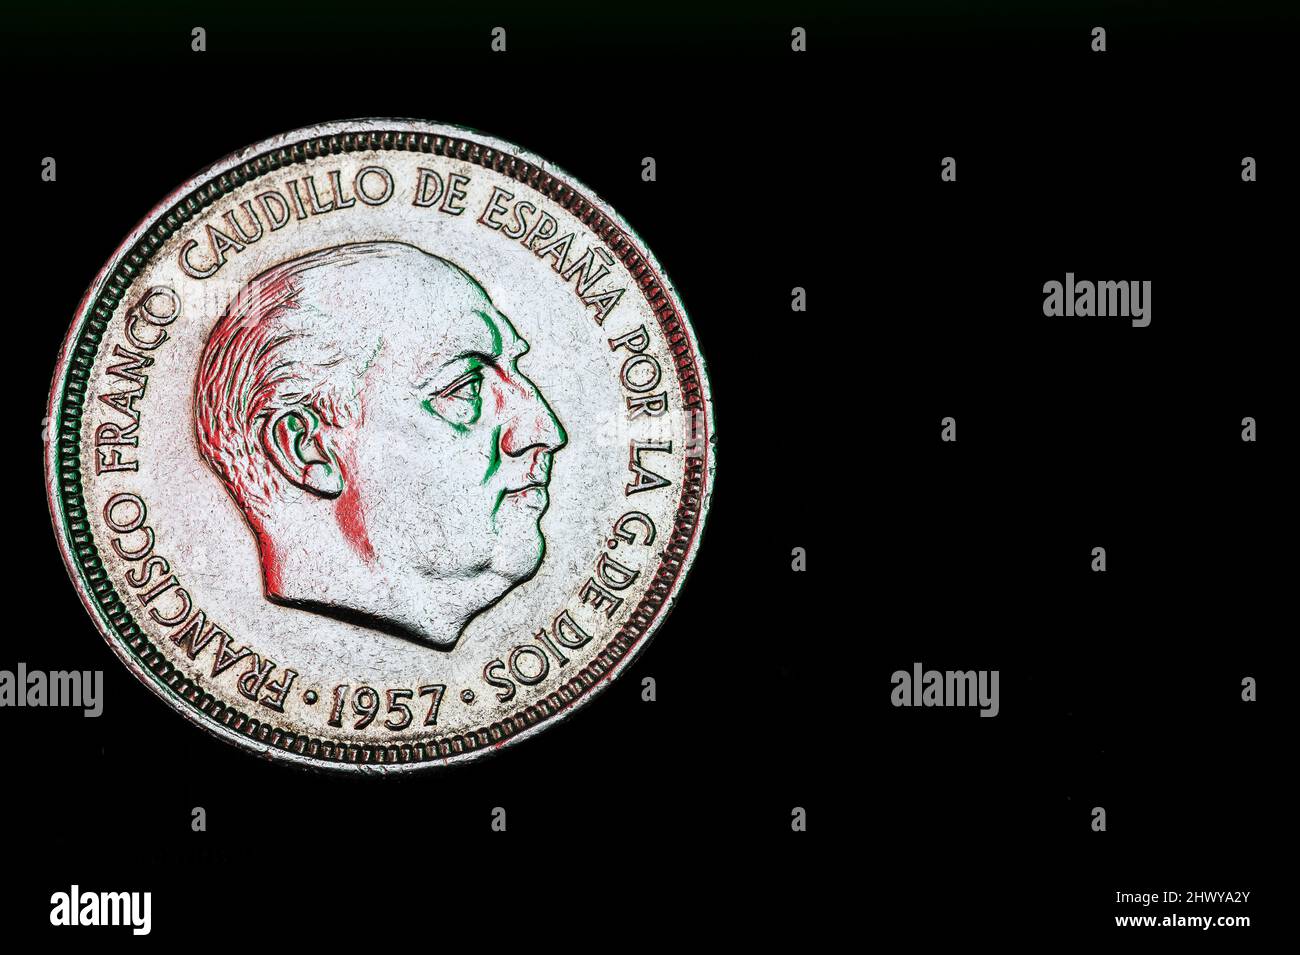 Francisco Franco Five Pesetas Coin 1957 Obverse Reverse Close Up Copy Space Black Background Stock Photo